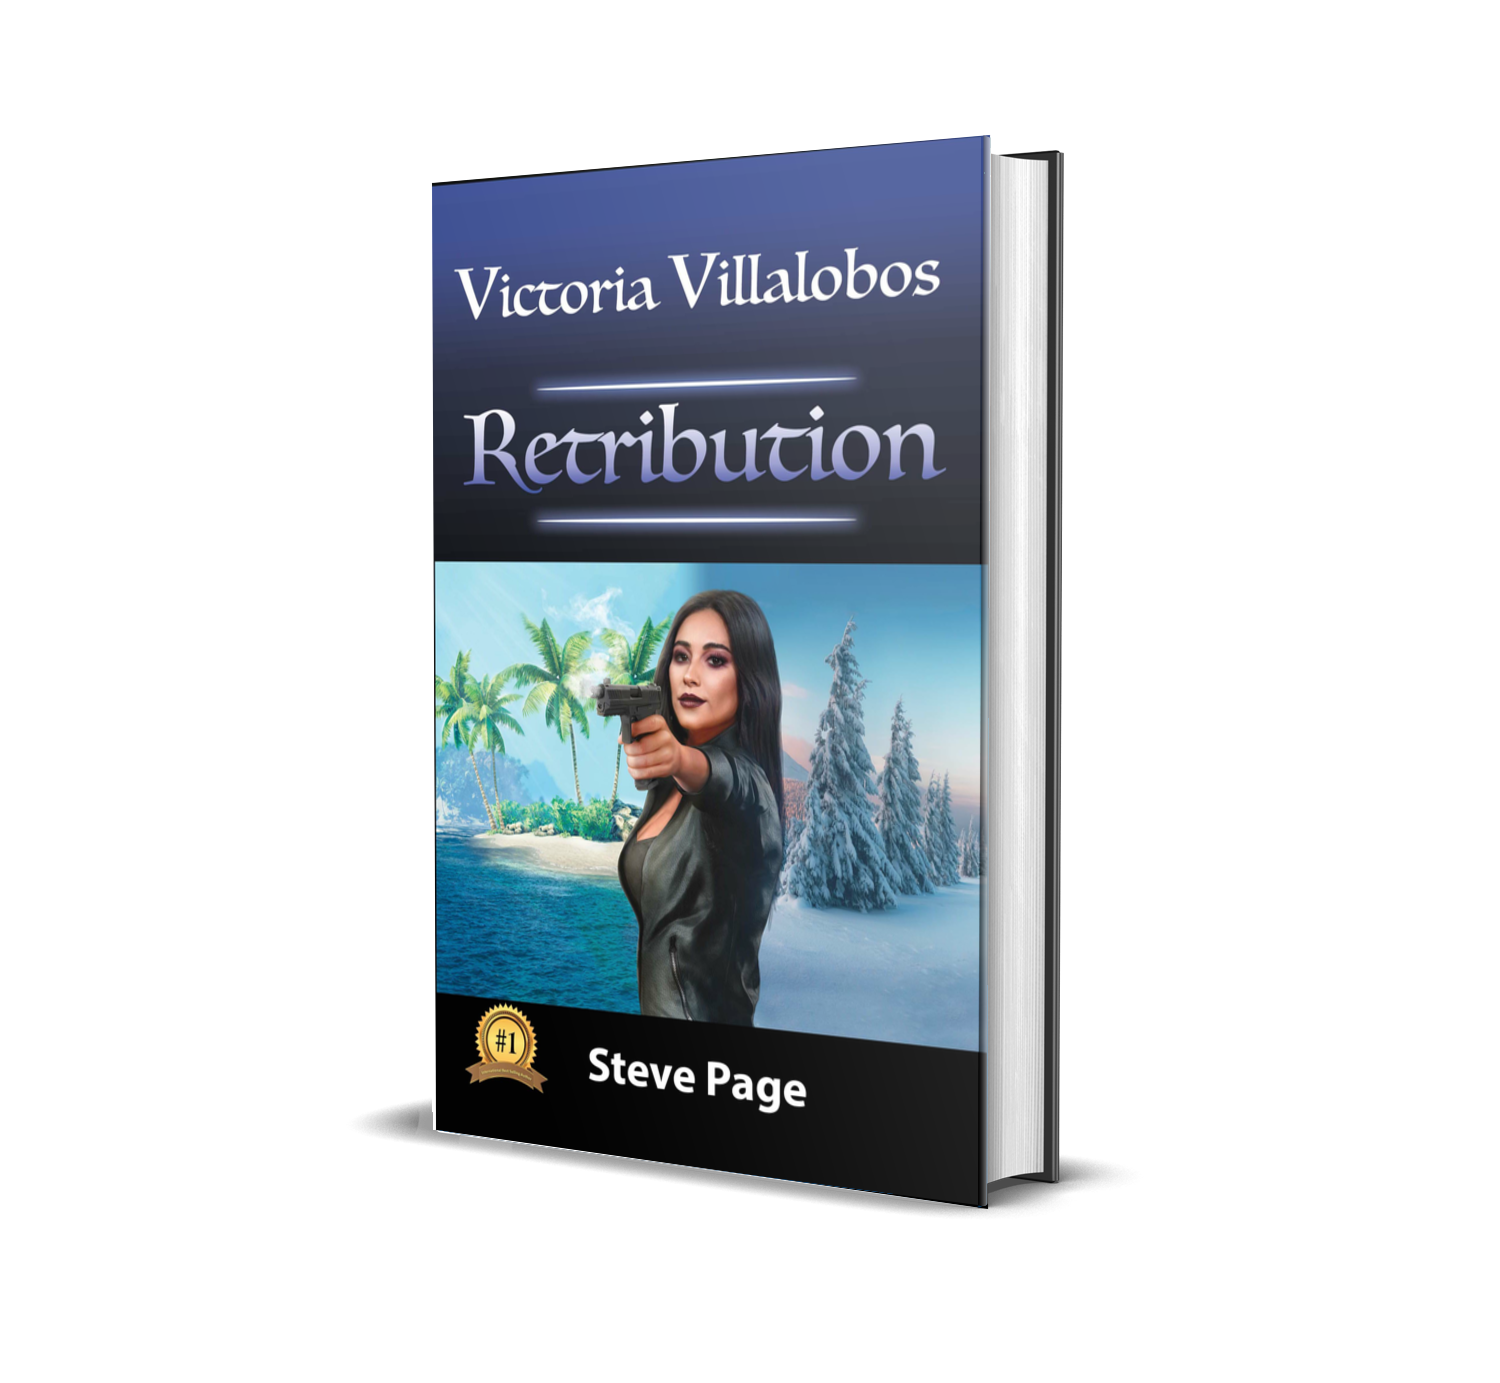 Victoria Villalobos - Retribution - - by author Steve Page - Dust Jacket Hardcover mockup